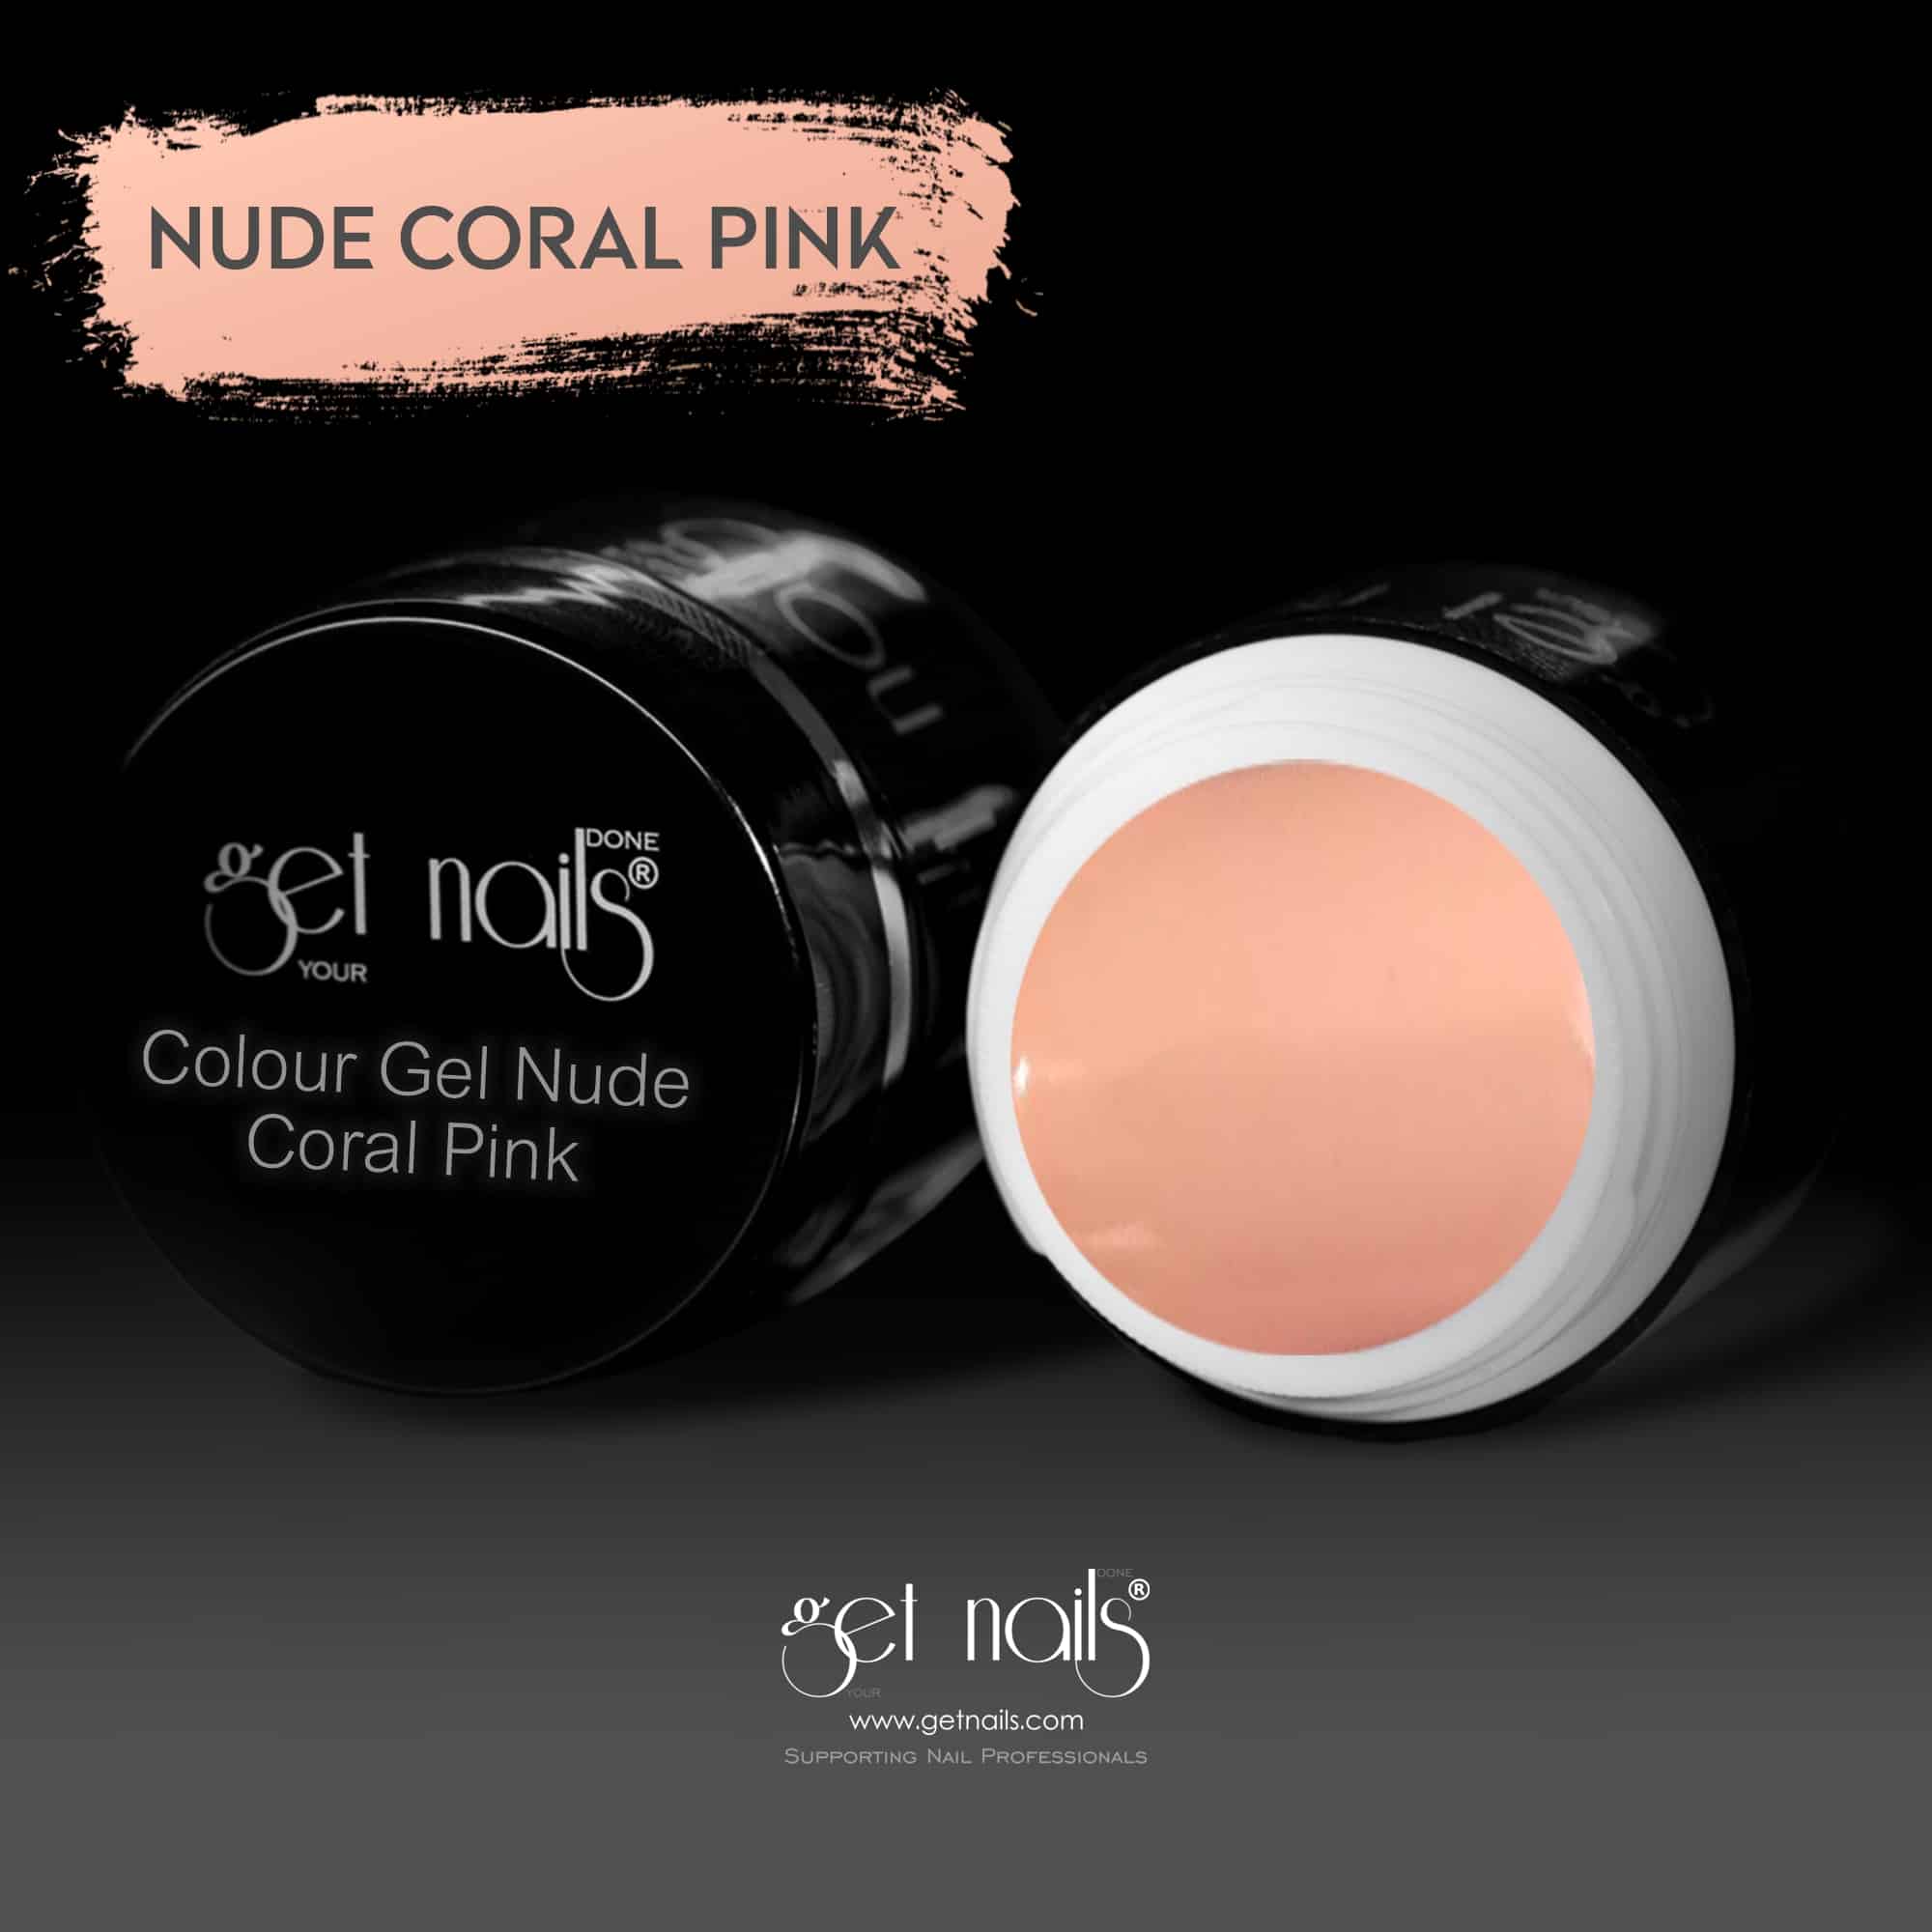 Get Nails Austria - Colour Gel Nude Coral Pink 5g